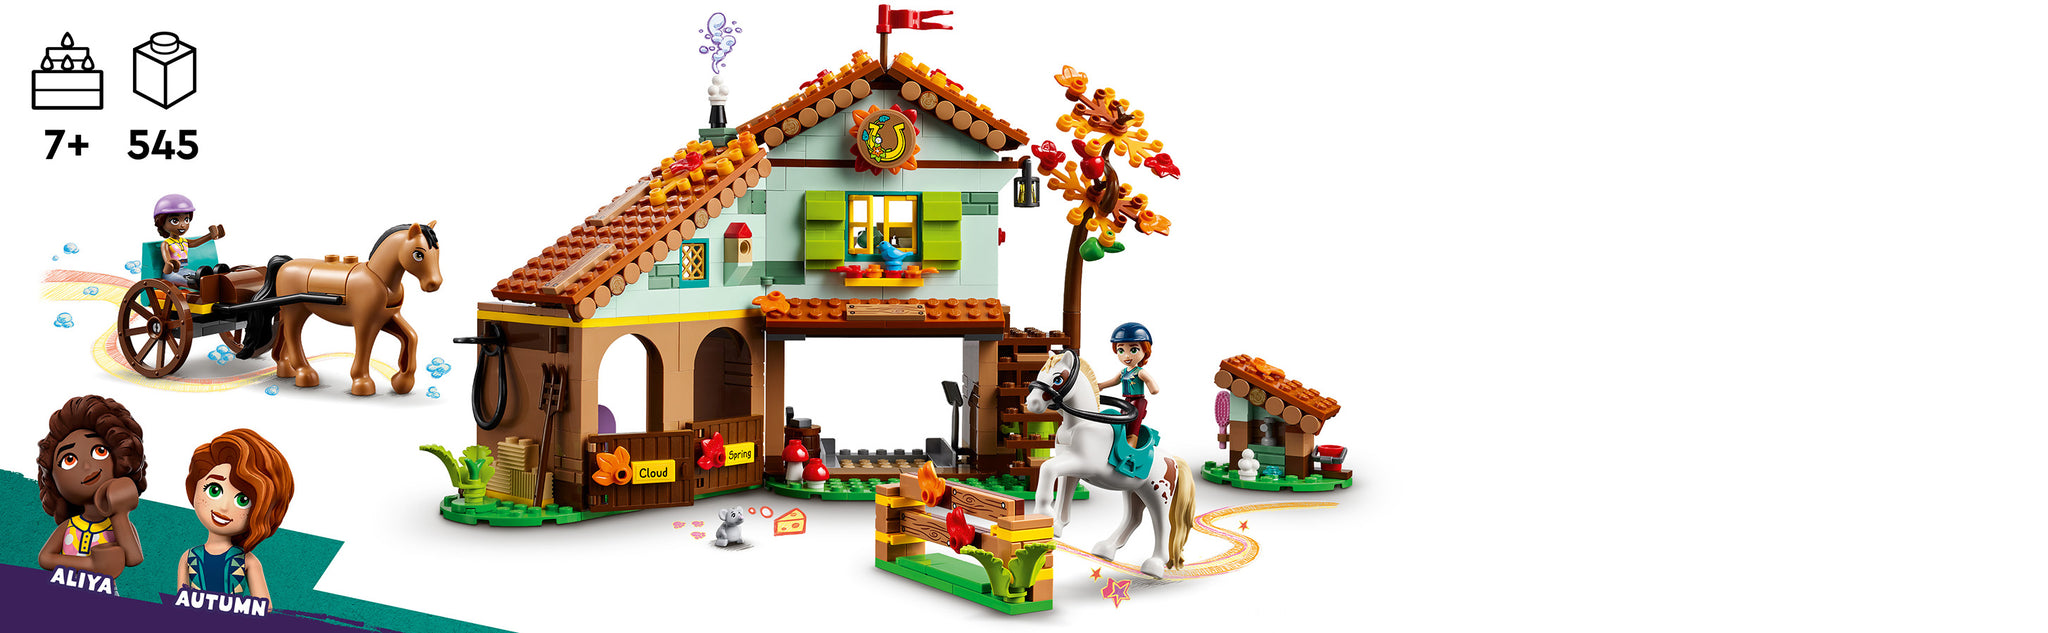 LEGO 41745 Autumn's Paardenstal